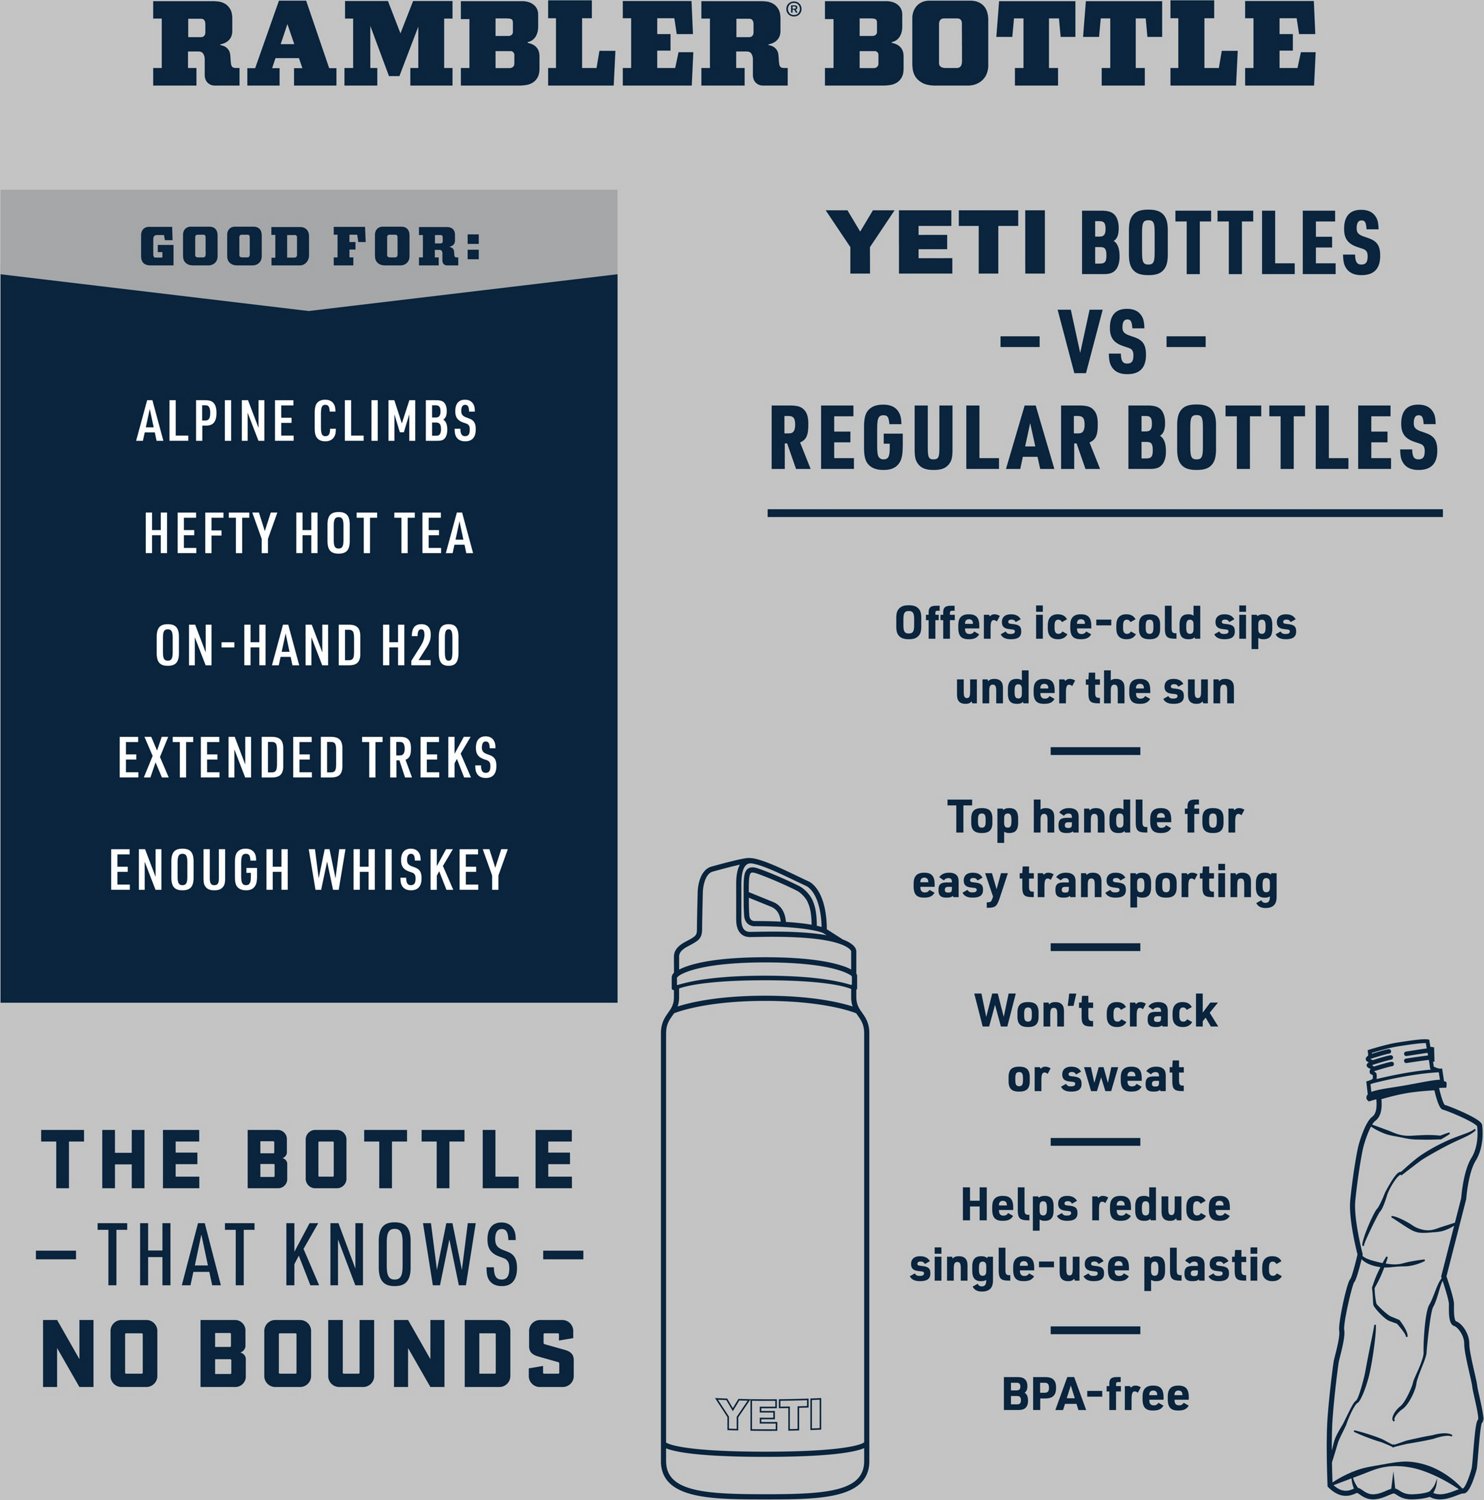 YETI Rambler 64oz Insulated Bottle